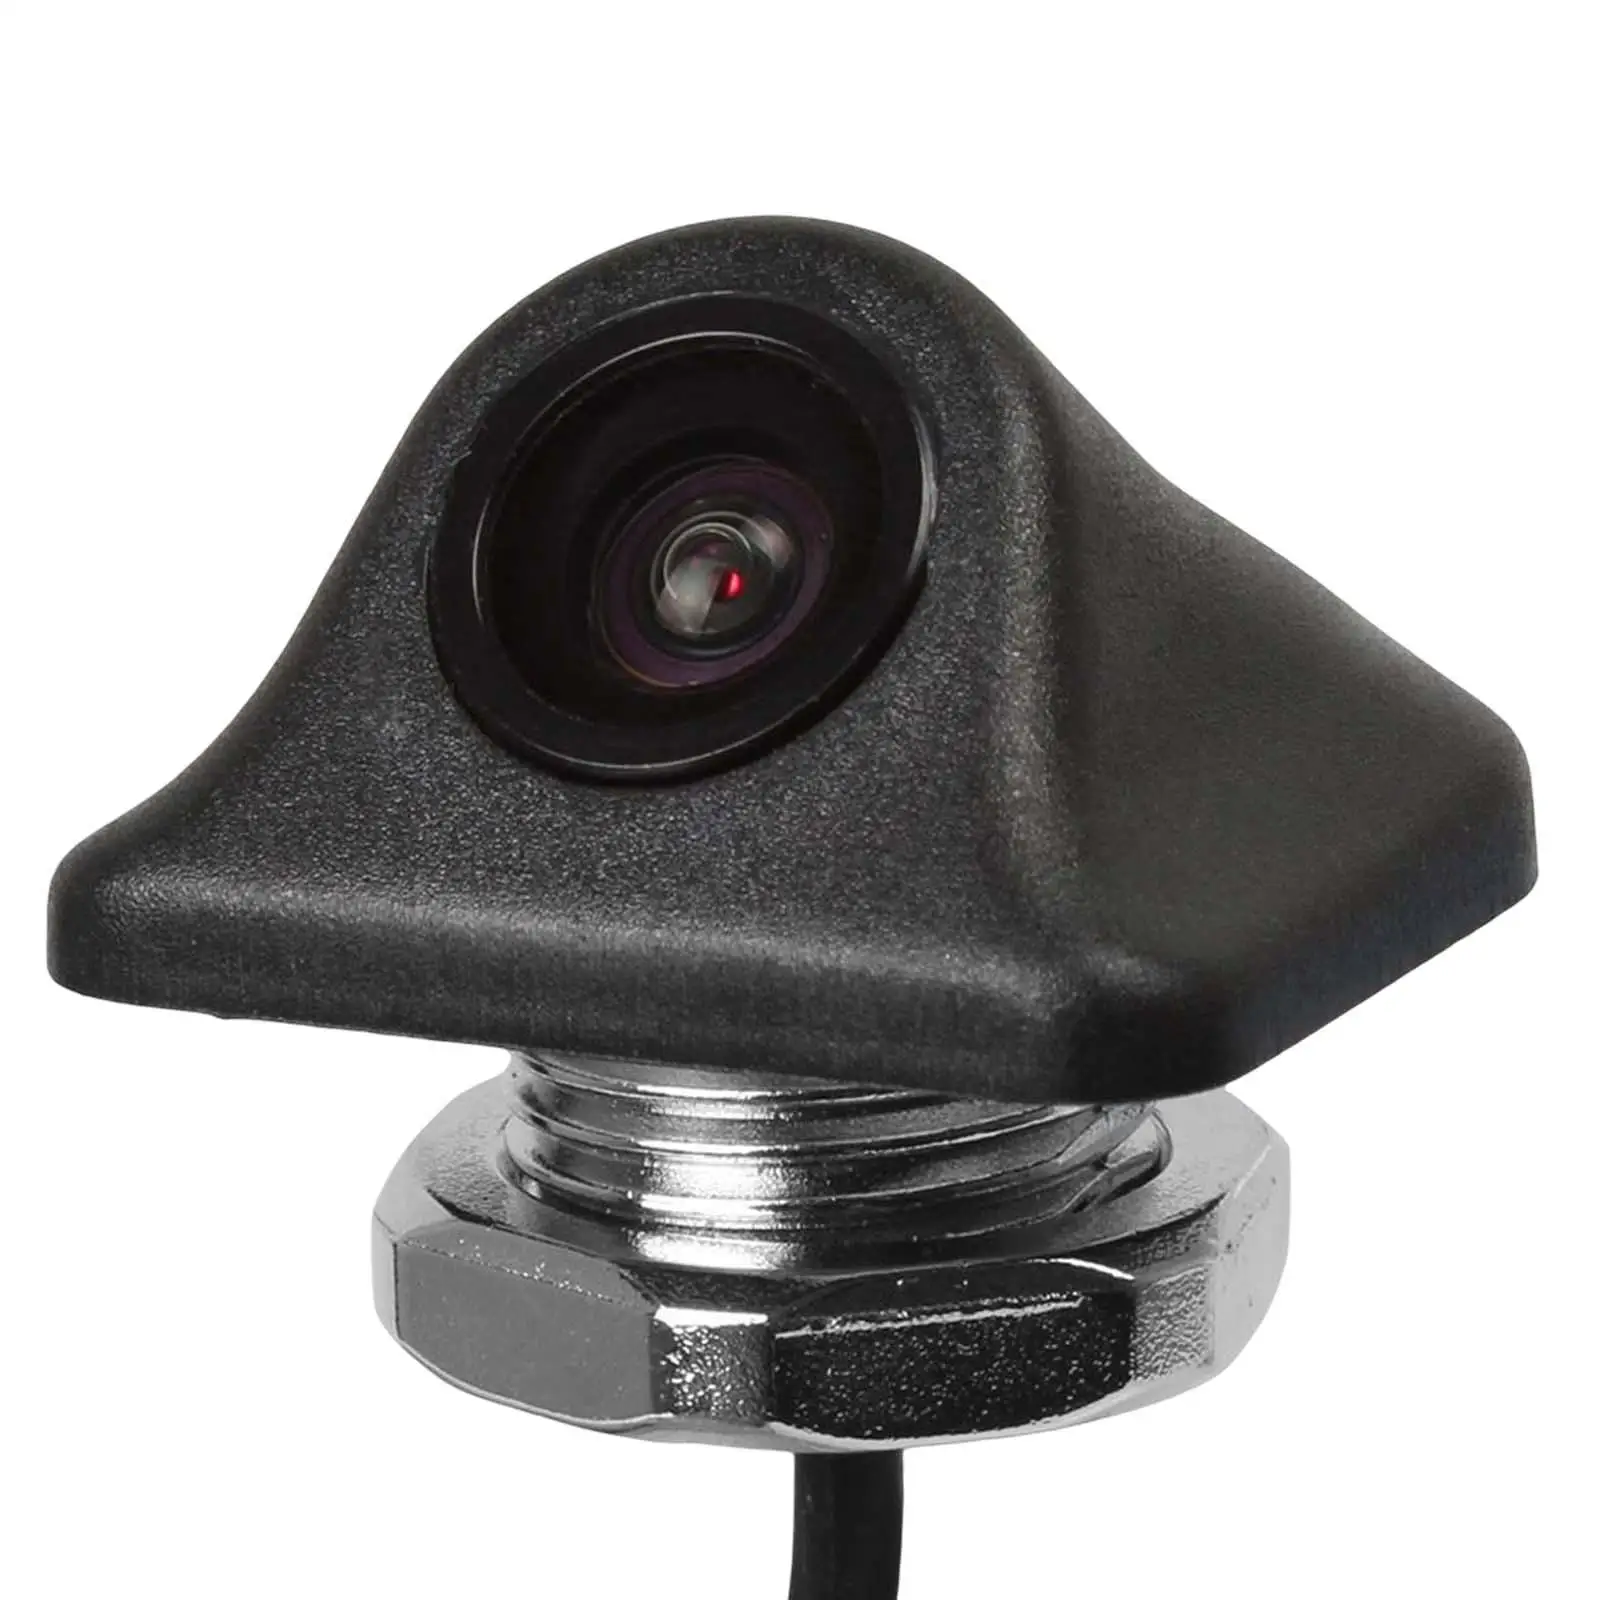 Universal Car Rear View Camera HD 170 Wide View Waterproof High Sensitivity Parking Reverse Backup Camera for Vehicle RV